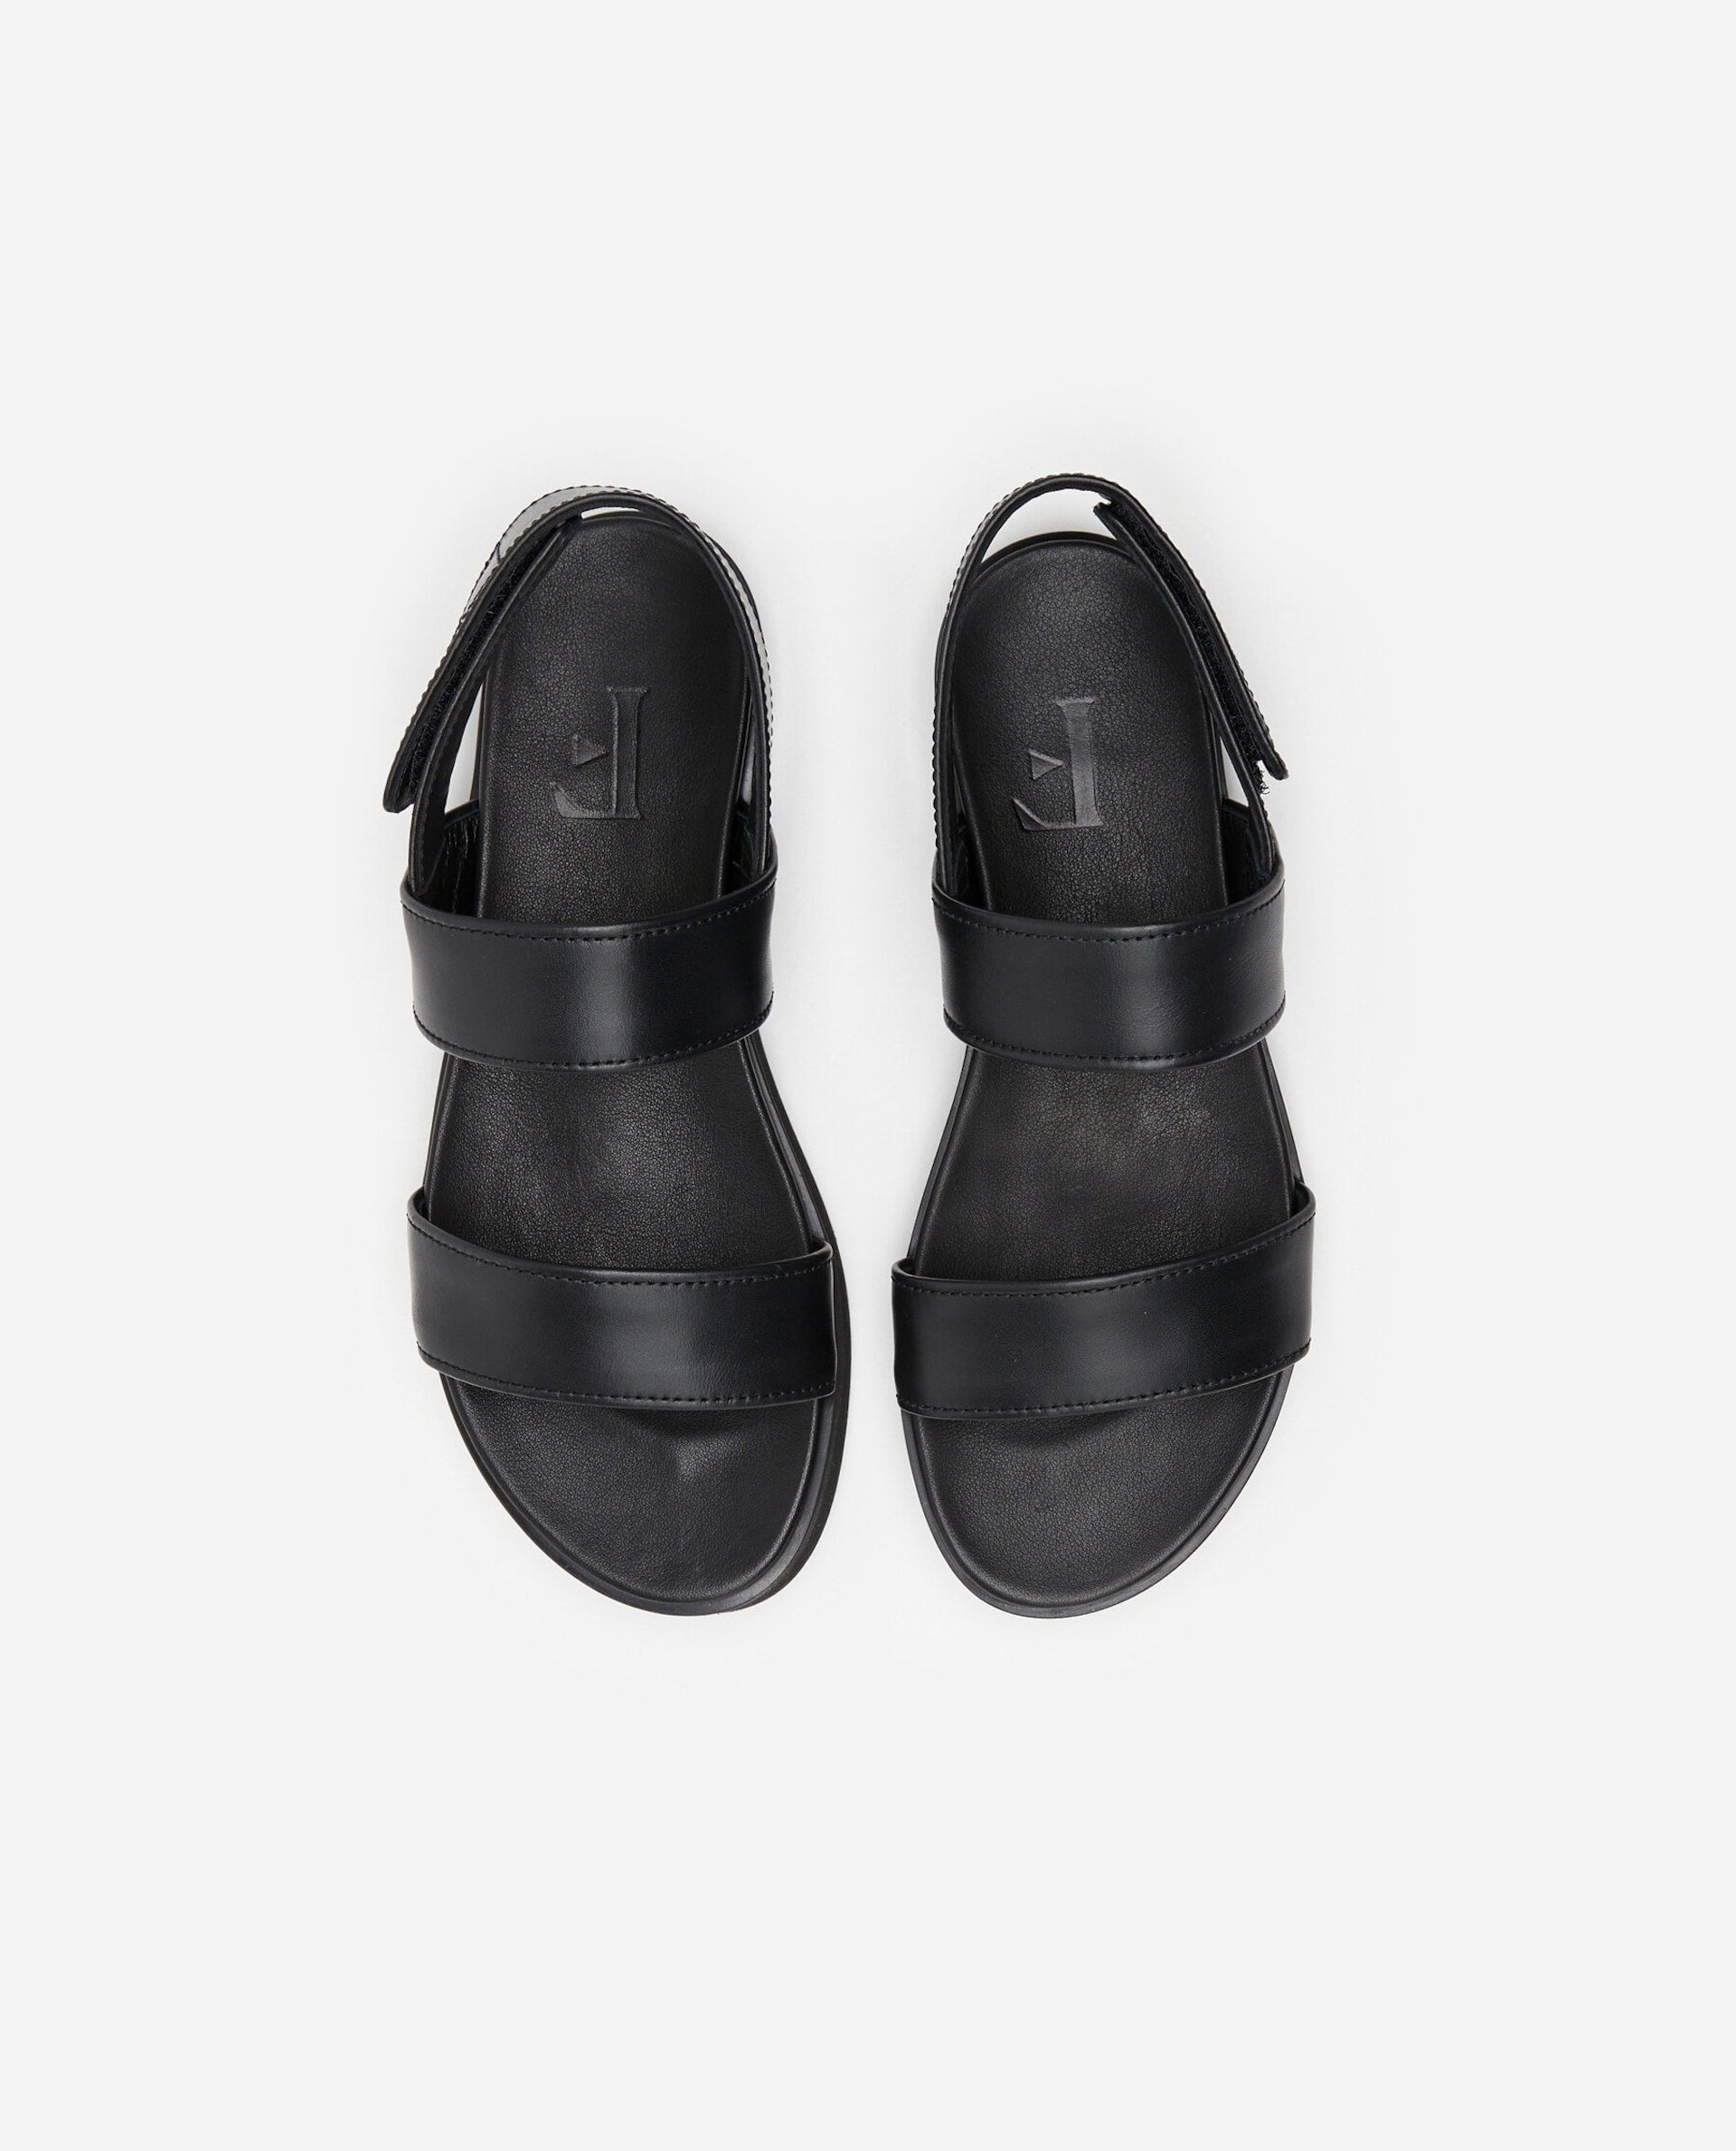 Lynn Black Leather Sandals 22010720801-001 - 4